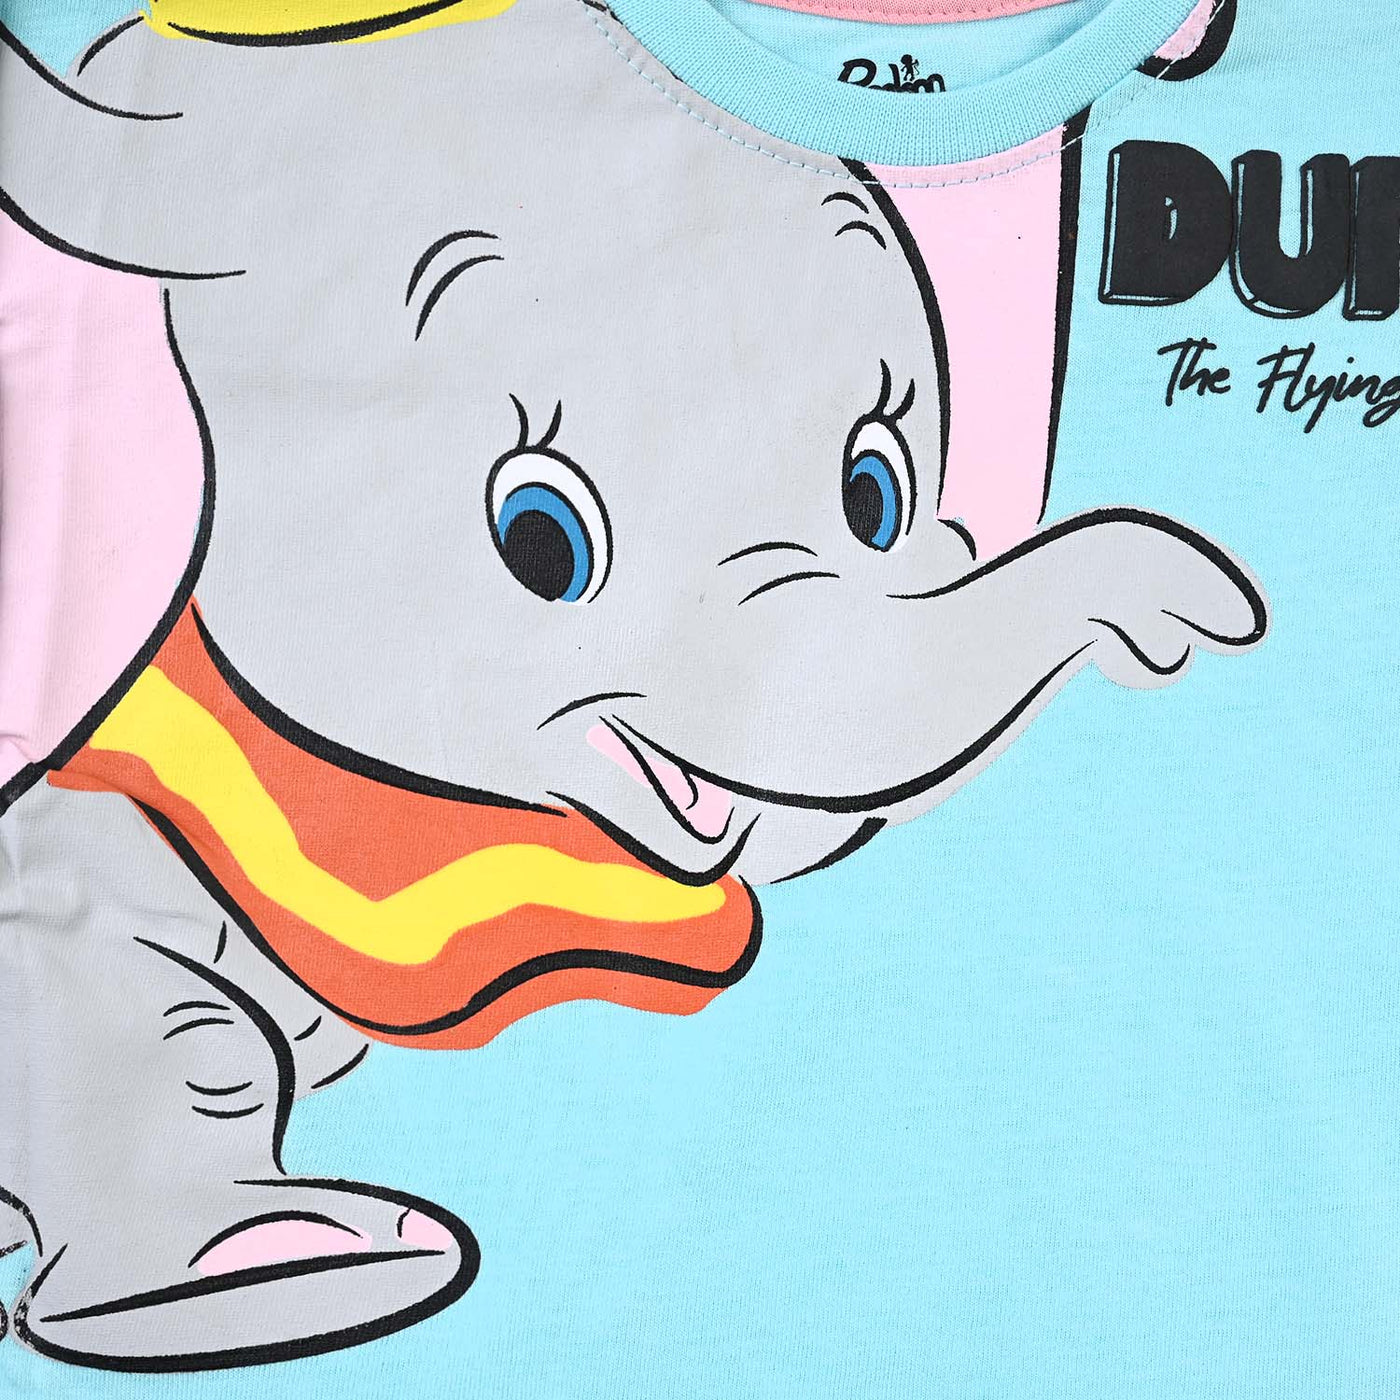 Infant Girls Slub Jersey T-Shirts Dumbo-T-Turquois